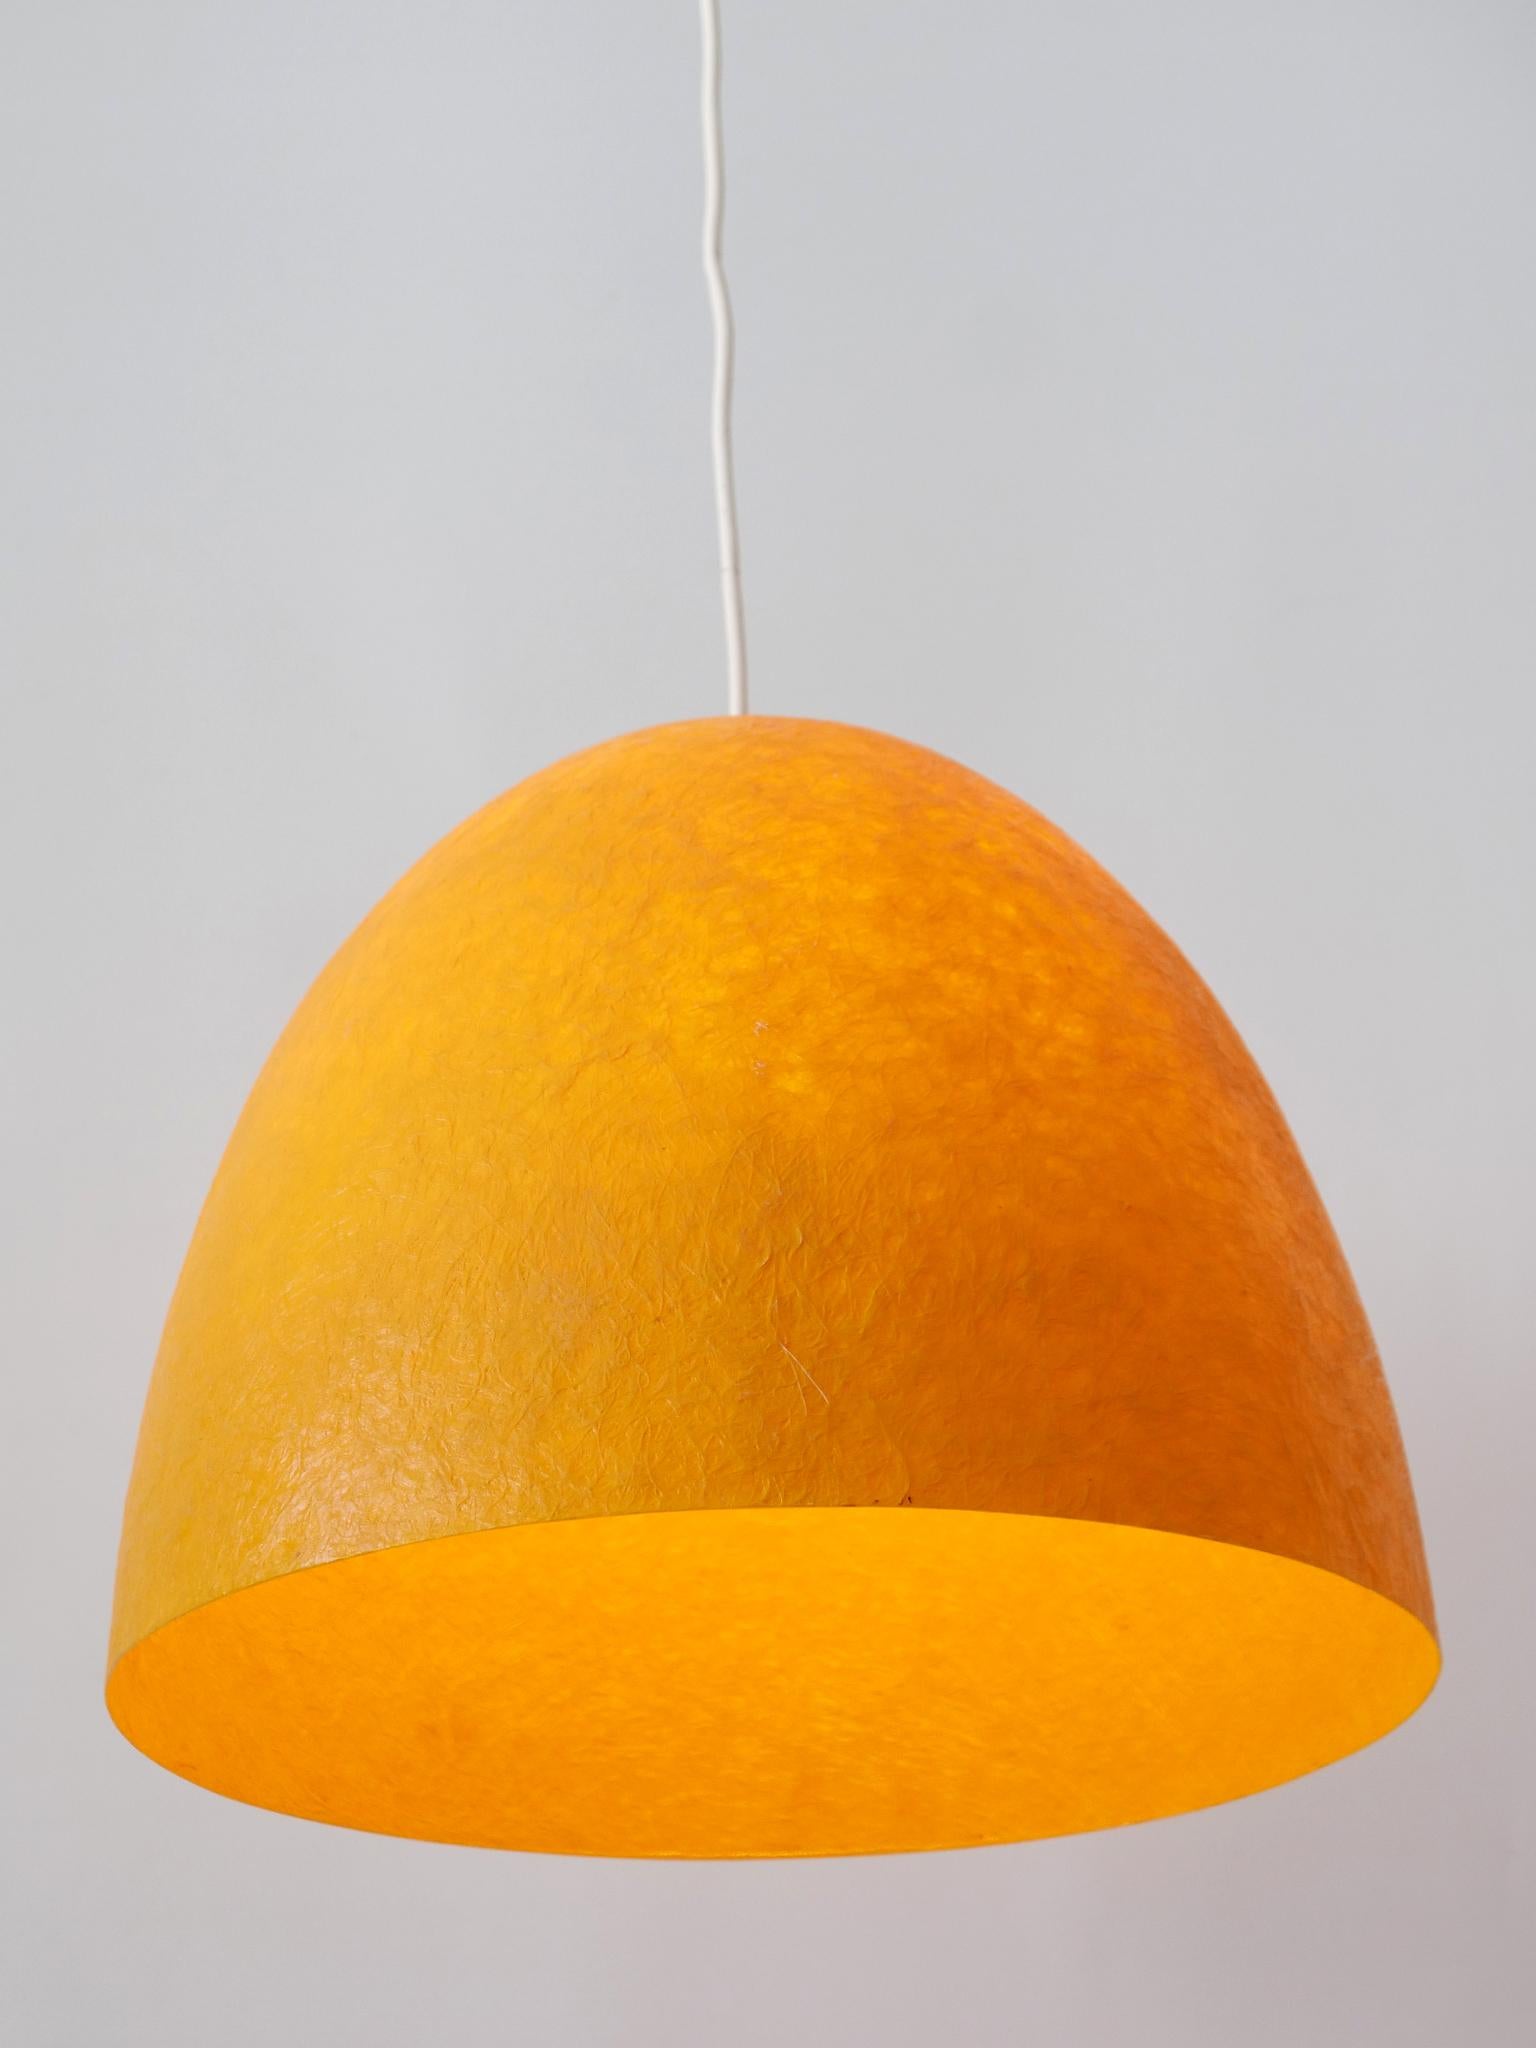 Rare Mid-Century Modern Fiberglass Pendant Lamp or Hanging Light Germany 1970s For Sale 7